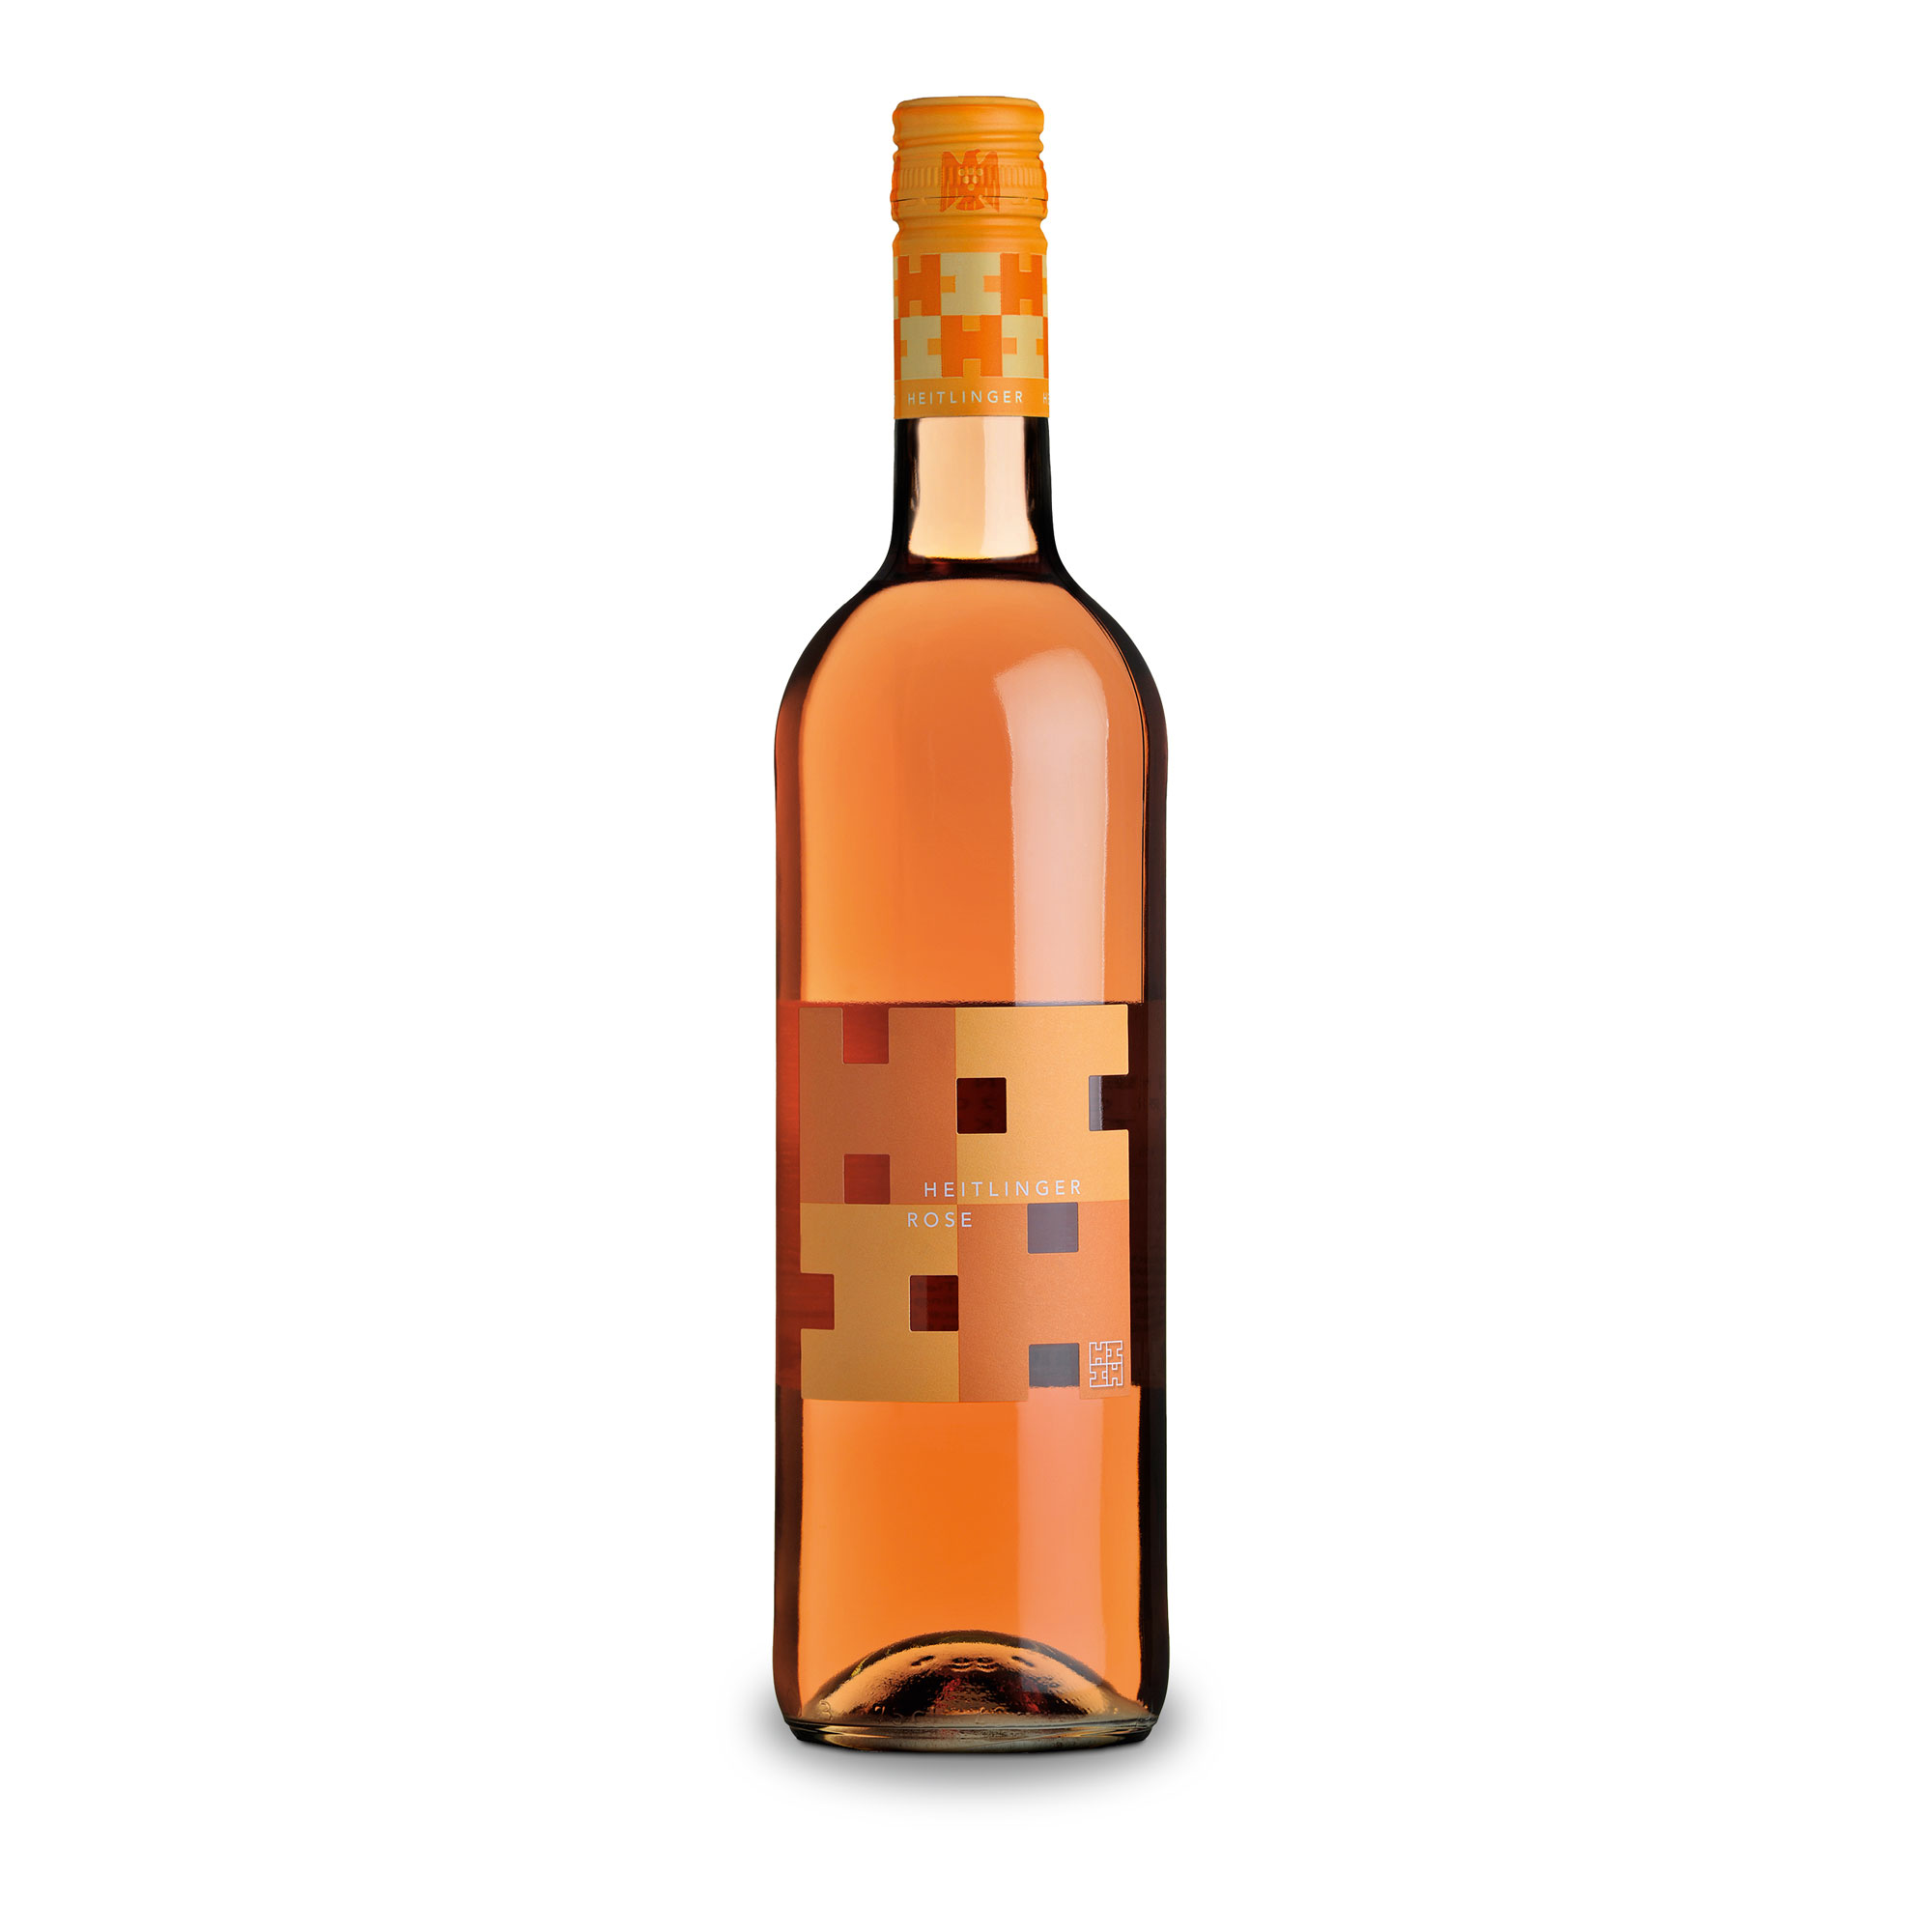 F.A.Z. Weinselection - Sechs Flaschen Rosé aus deutschen Weingebieten